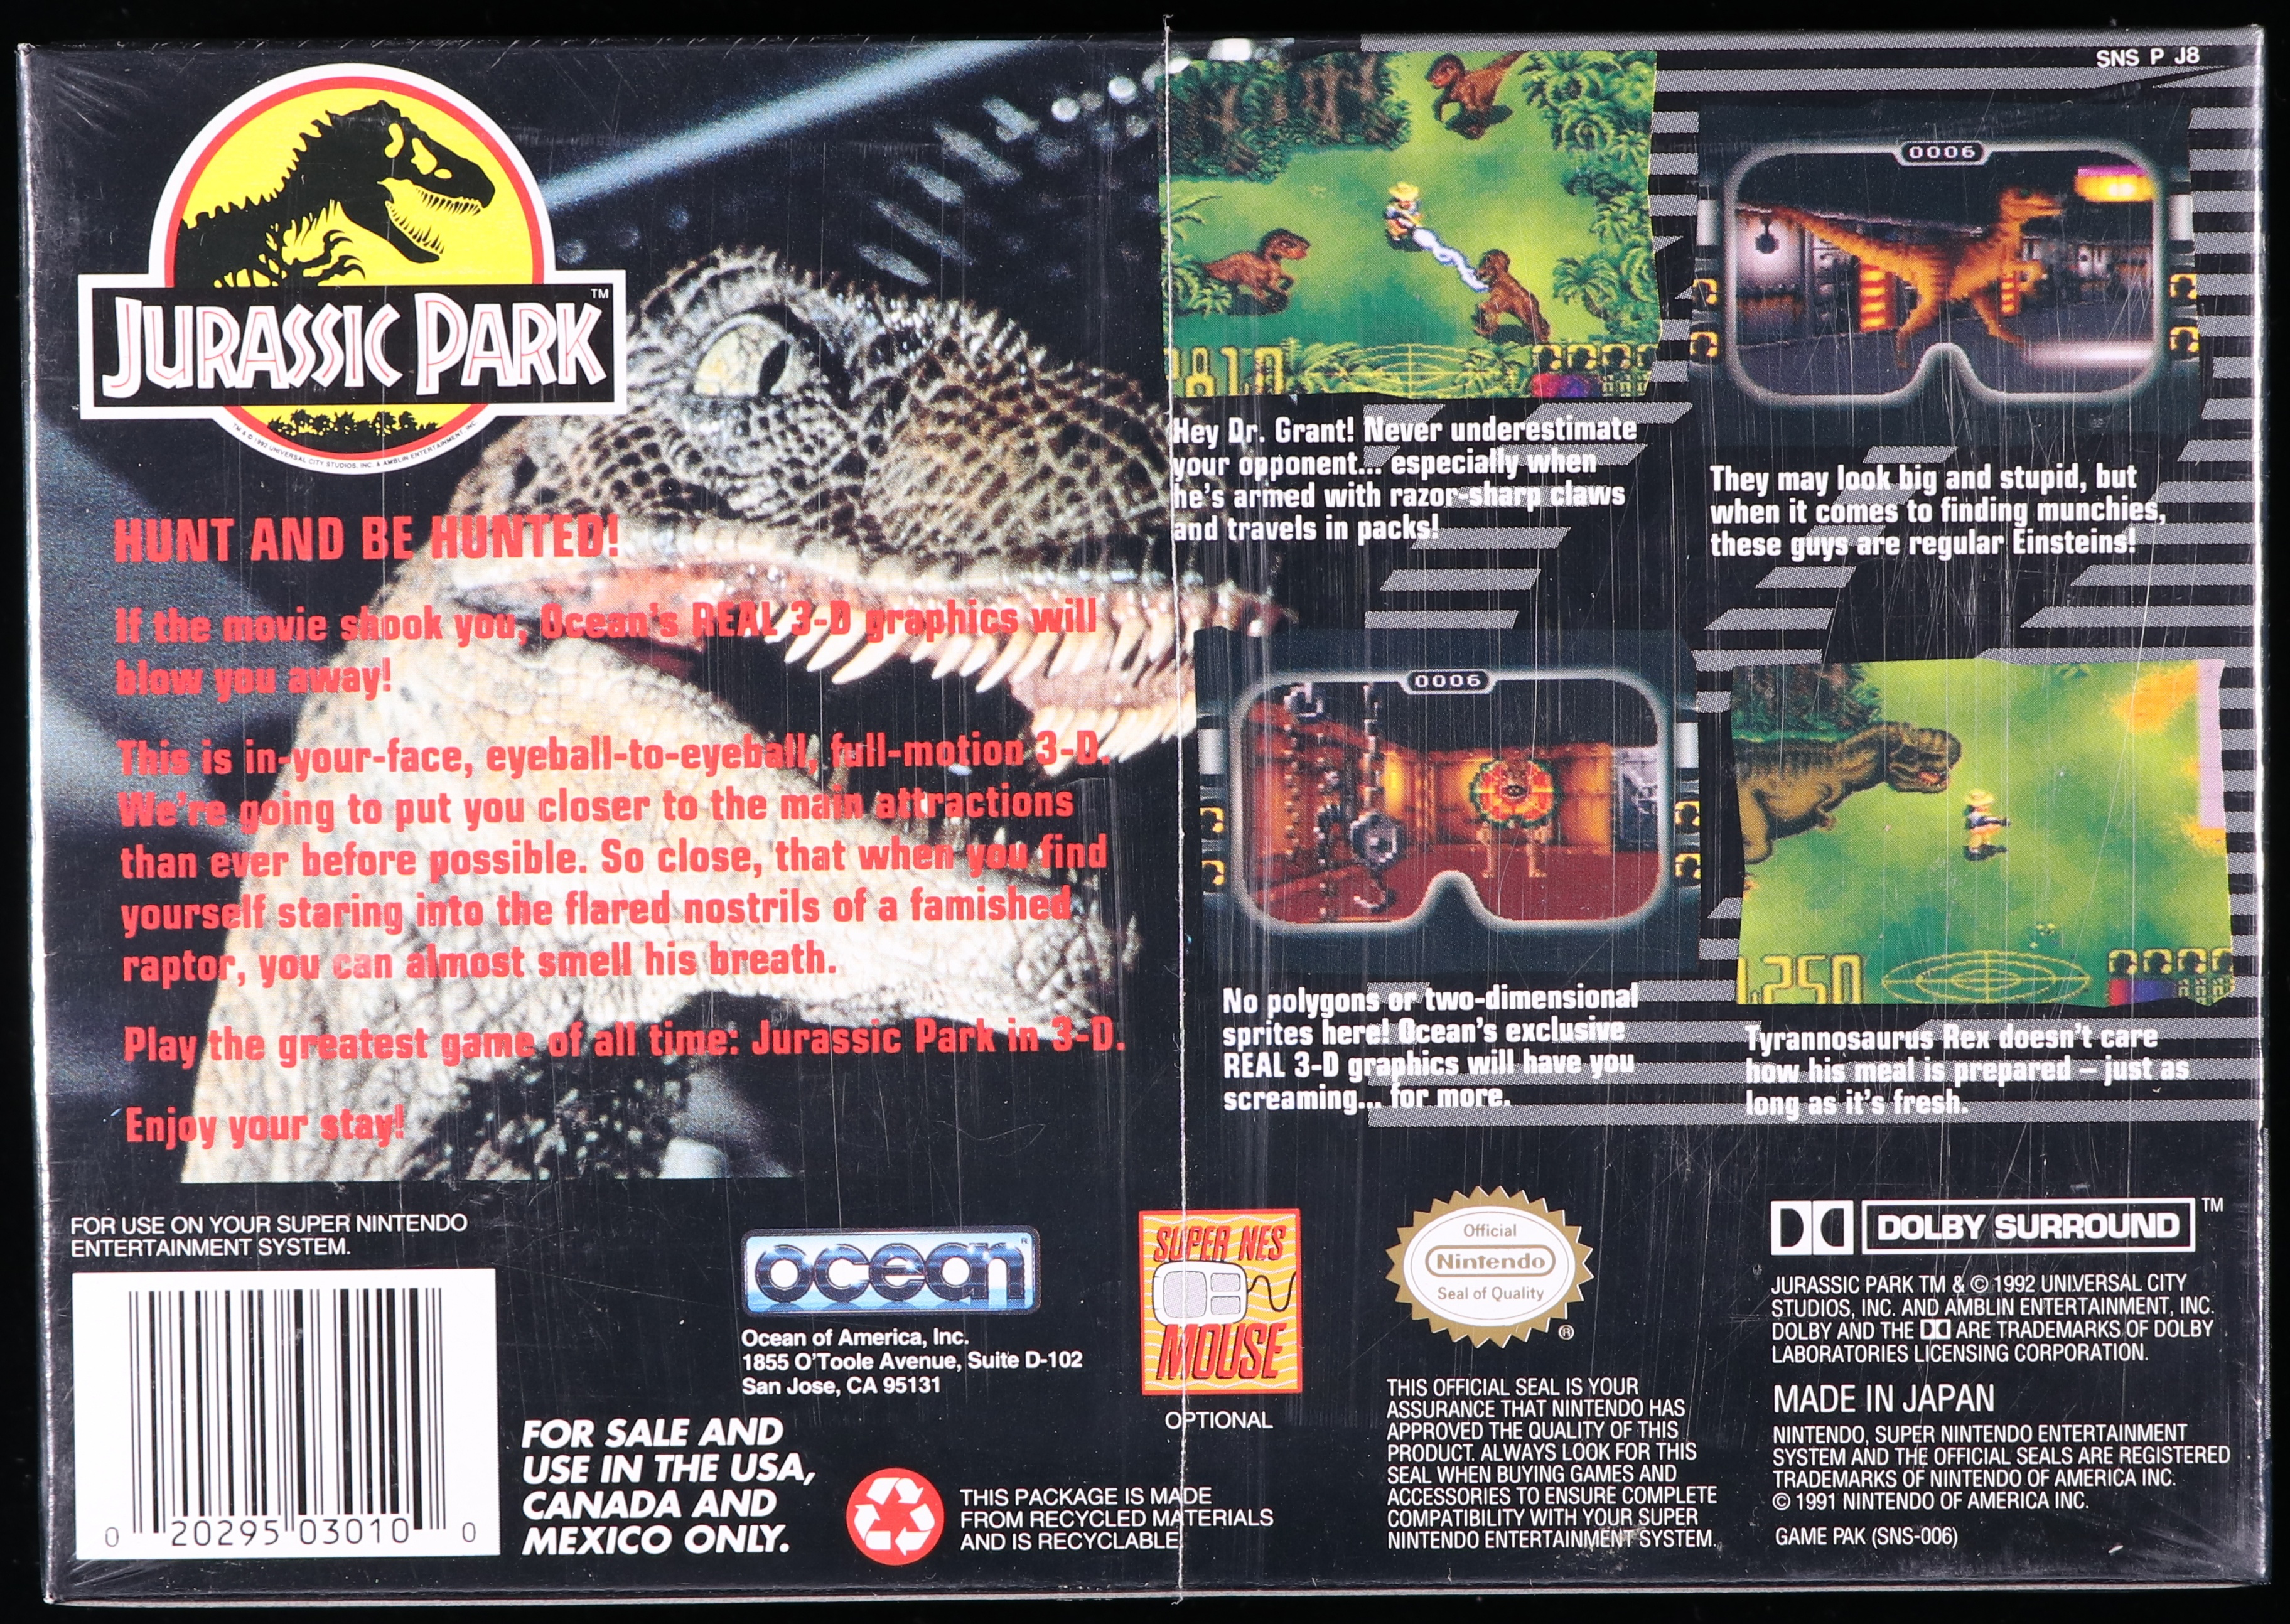 Jurassic Park SNES 9.8 A - NEBRASKA COLLECTION